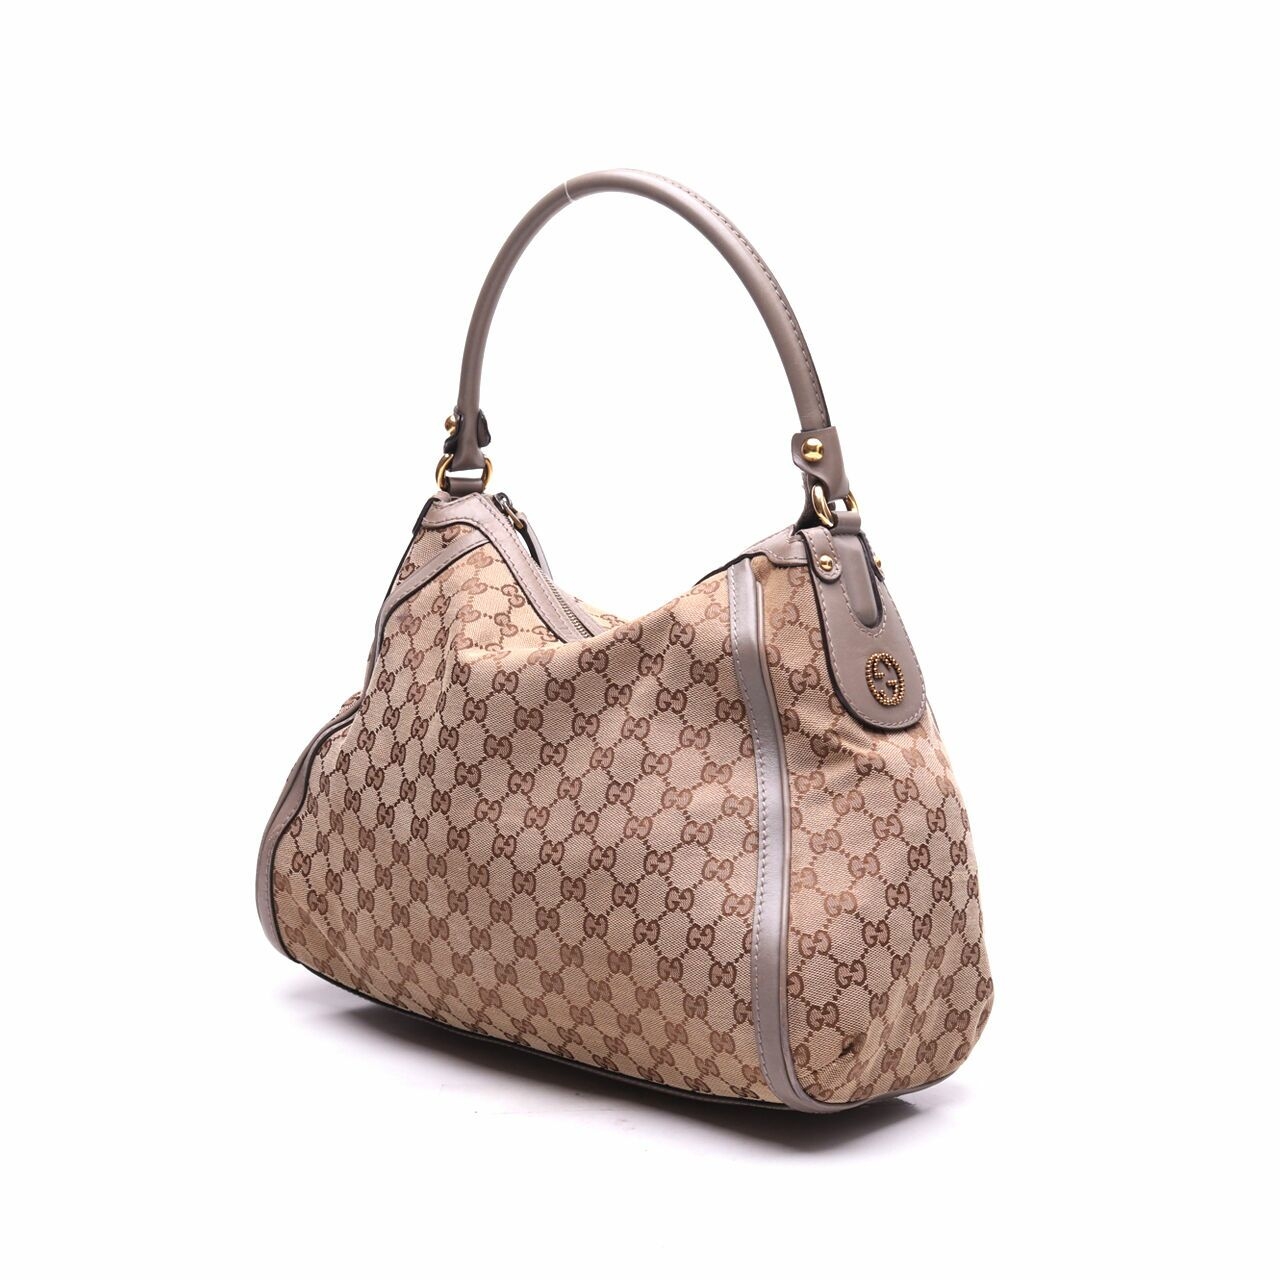  Gucci Beige/Grey Guccissima Leather Scarlett Hobo Shoulder Bag